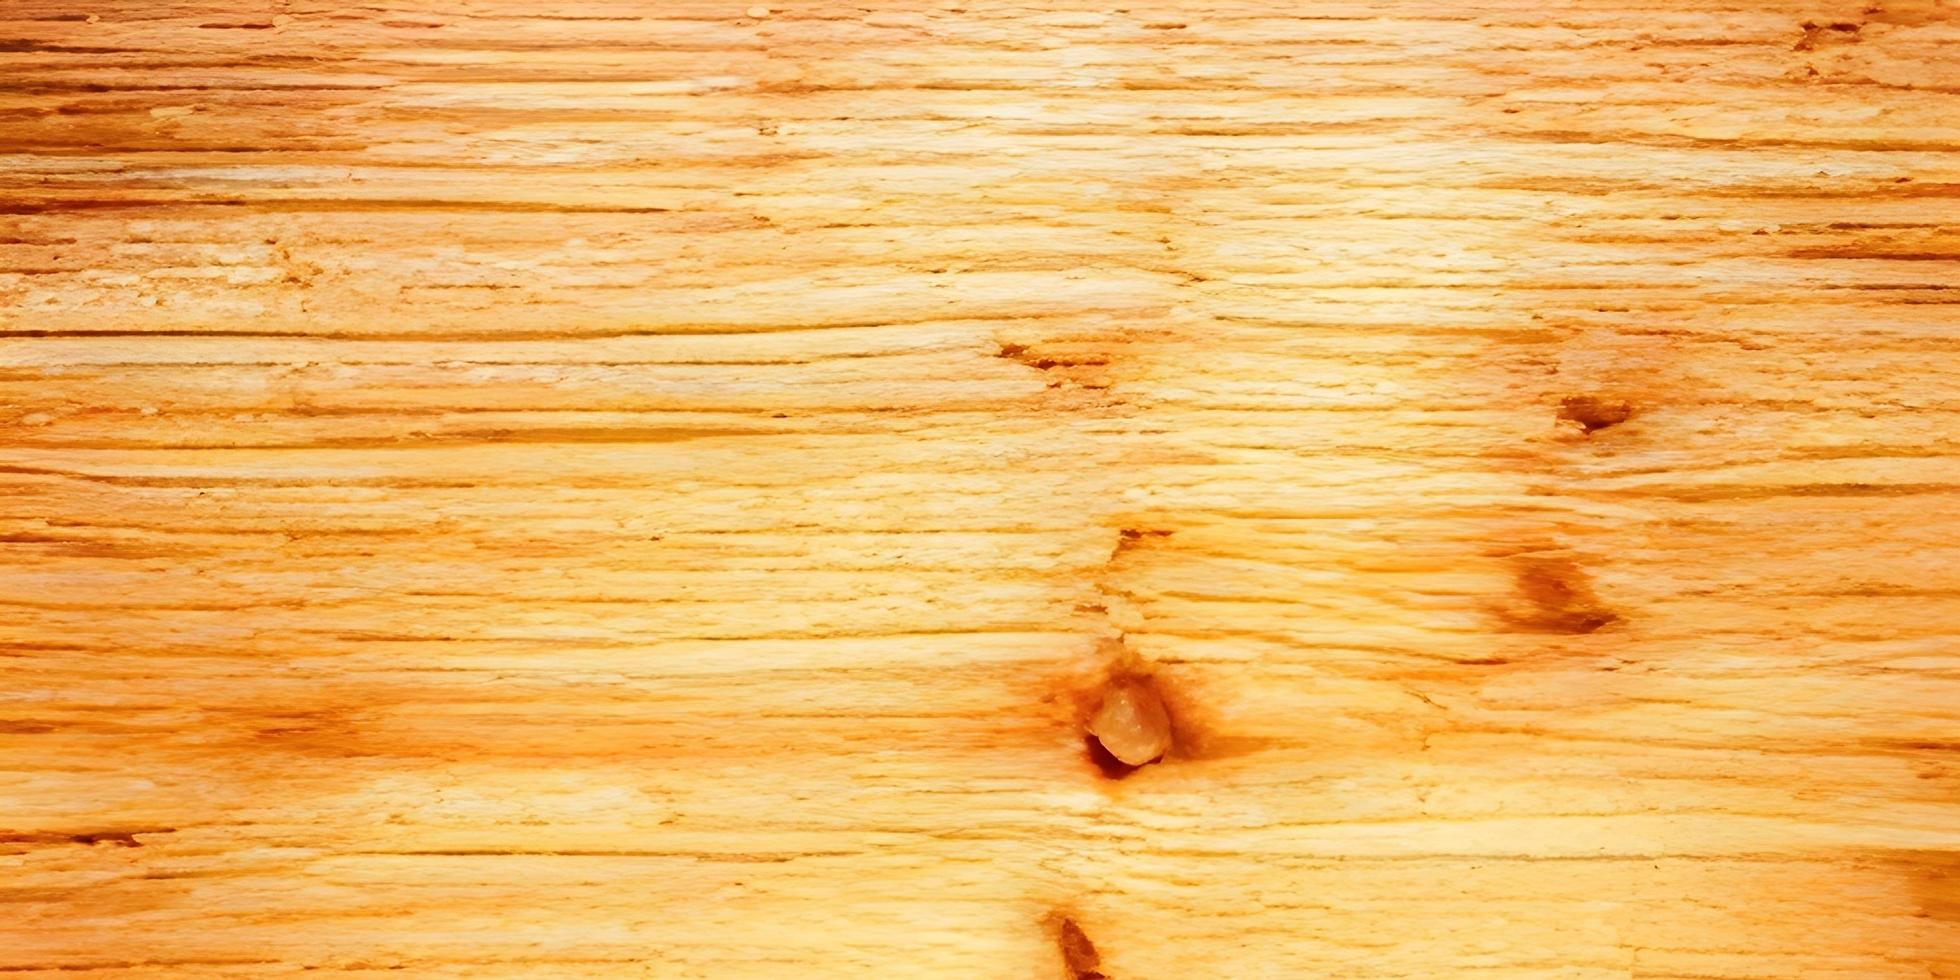 Textura de suelo de parquet laminado de madera o fondo abstracto de textura de grano de madera foto